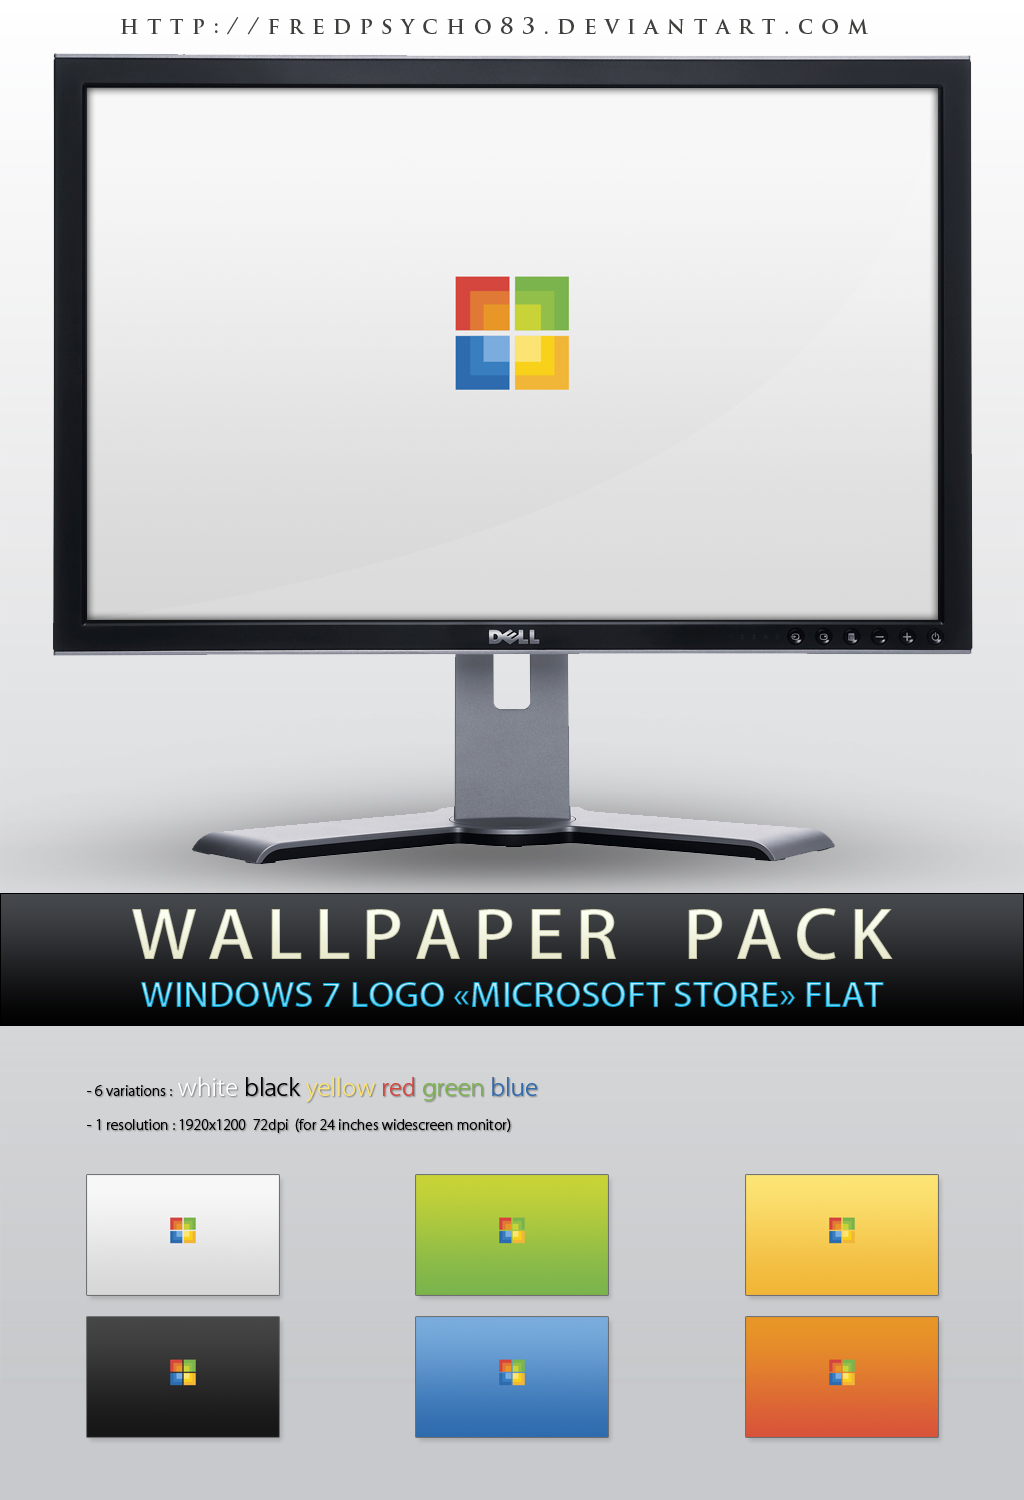 Windows 7 Logo 'Flat'